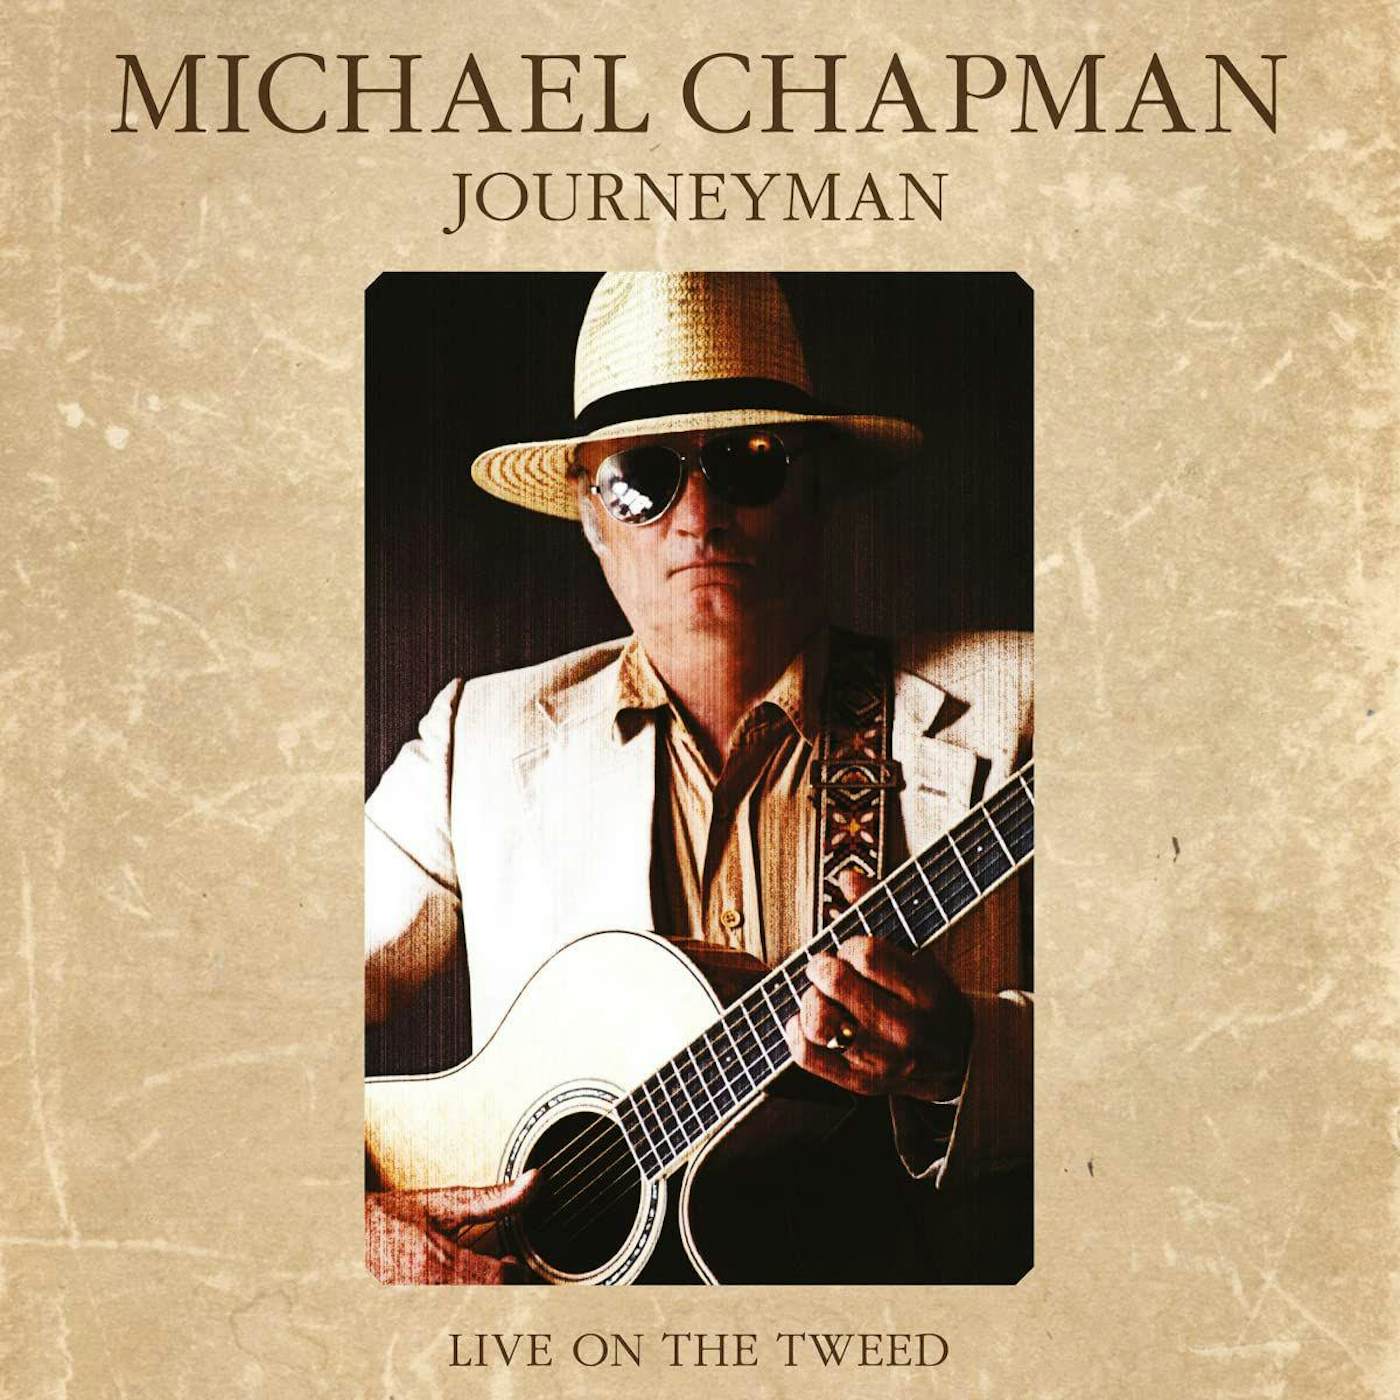 Michael Chapman Journeyman: Live On The Tweed Vinyl Record